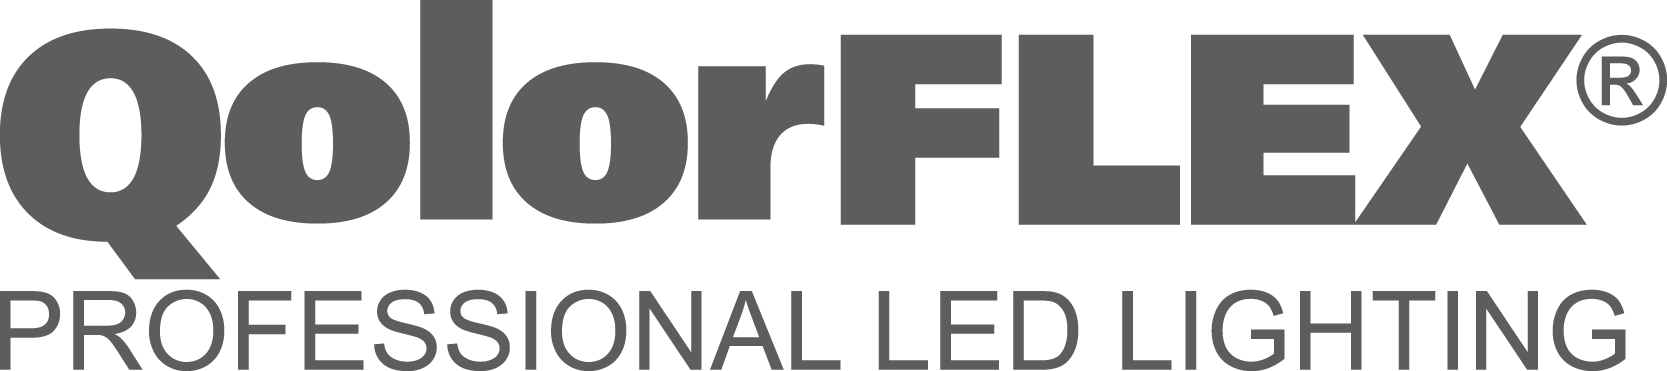 qolorflex-professionalledlighting-logo-gray